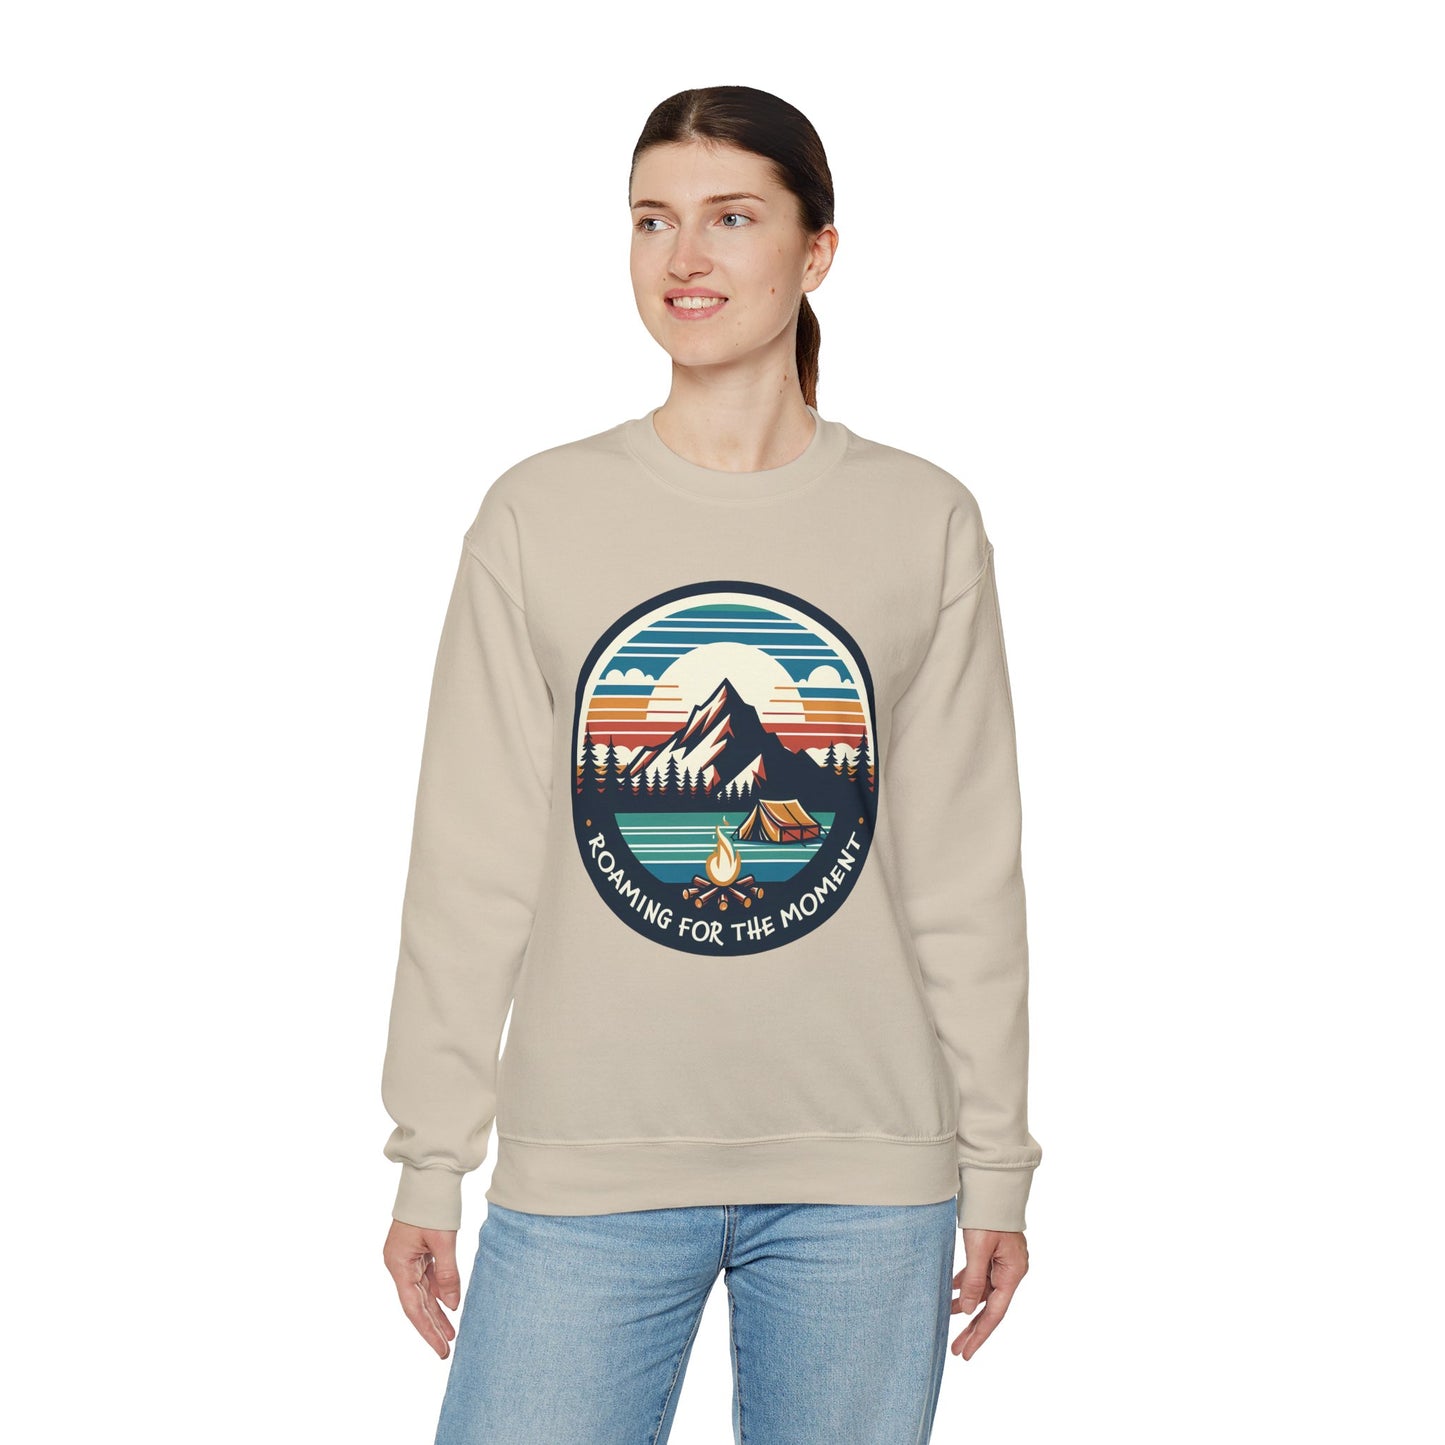 Camping Roaming Sweatshirt, Outdoor Adventures Crewneck, Retro Campfire Shirt, Gift for Camper Nature Wilderness Lovers